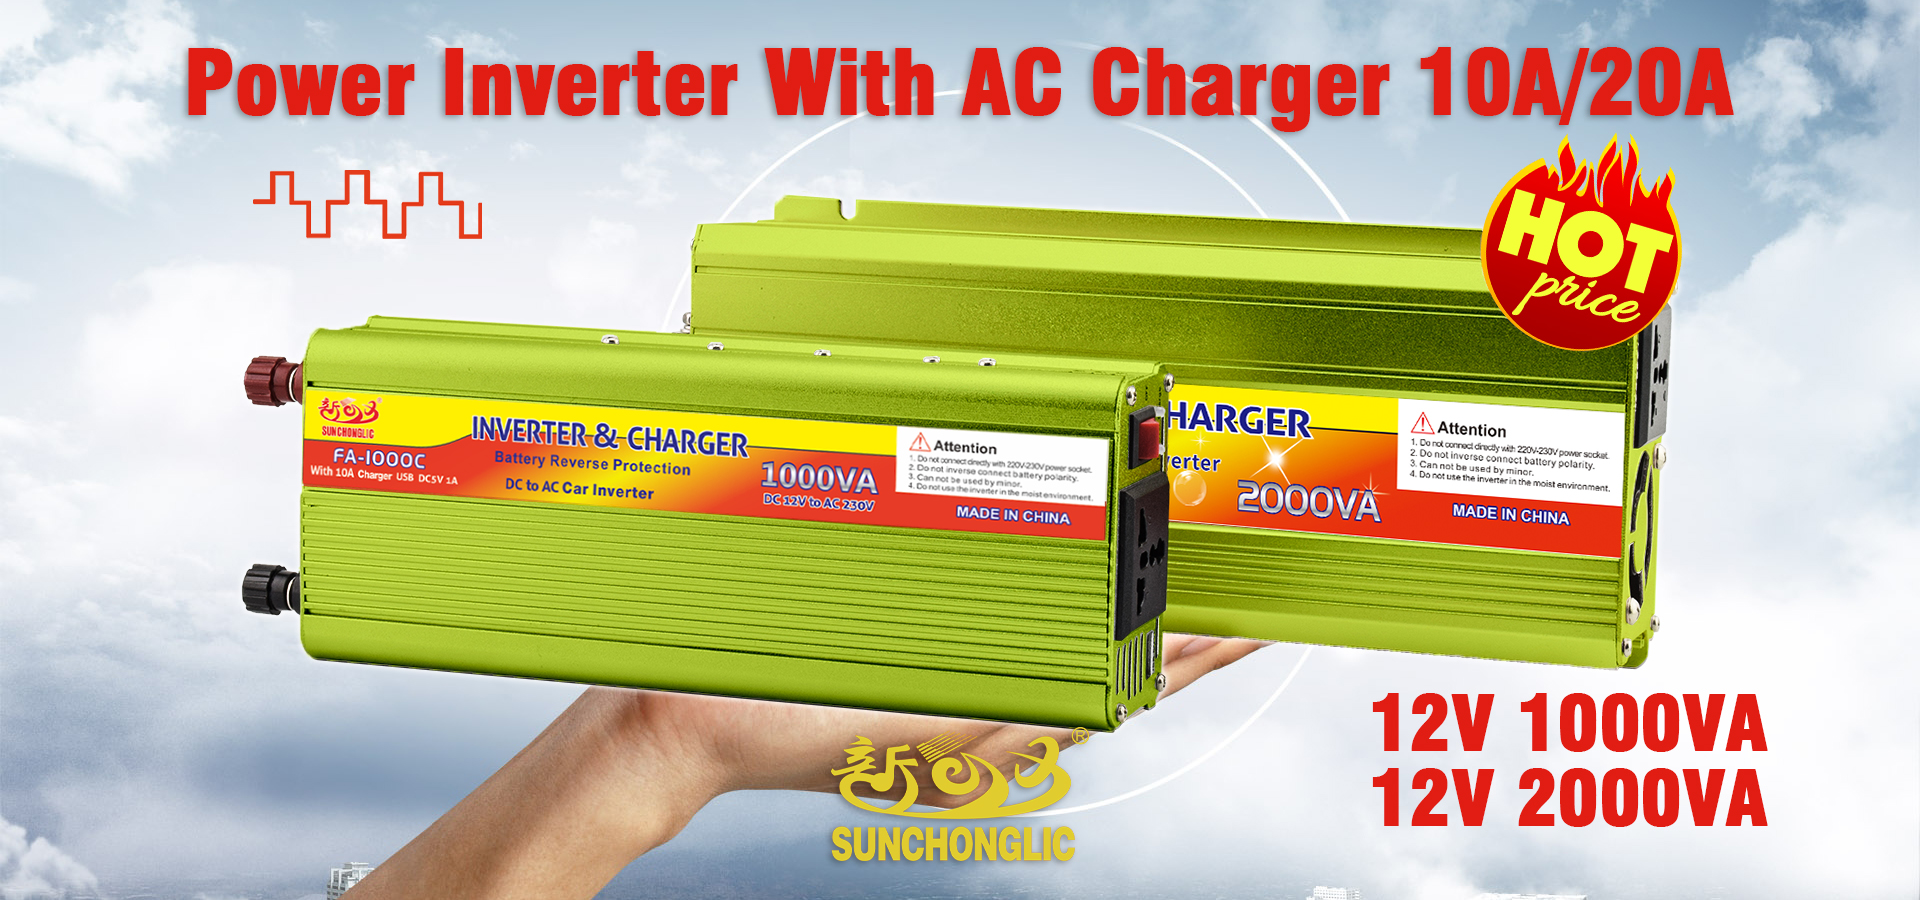 Power inverter 1000va 2000va with charger